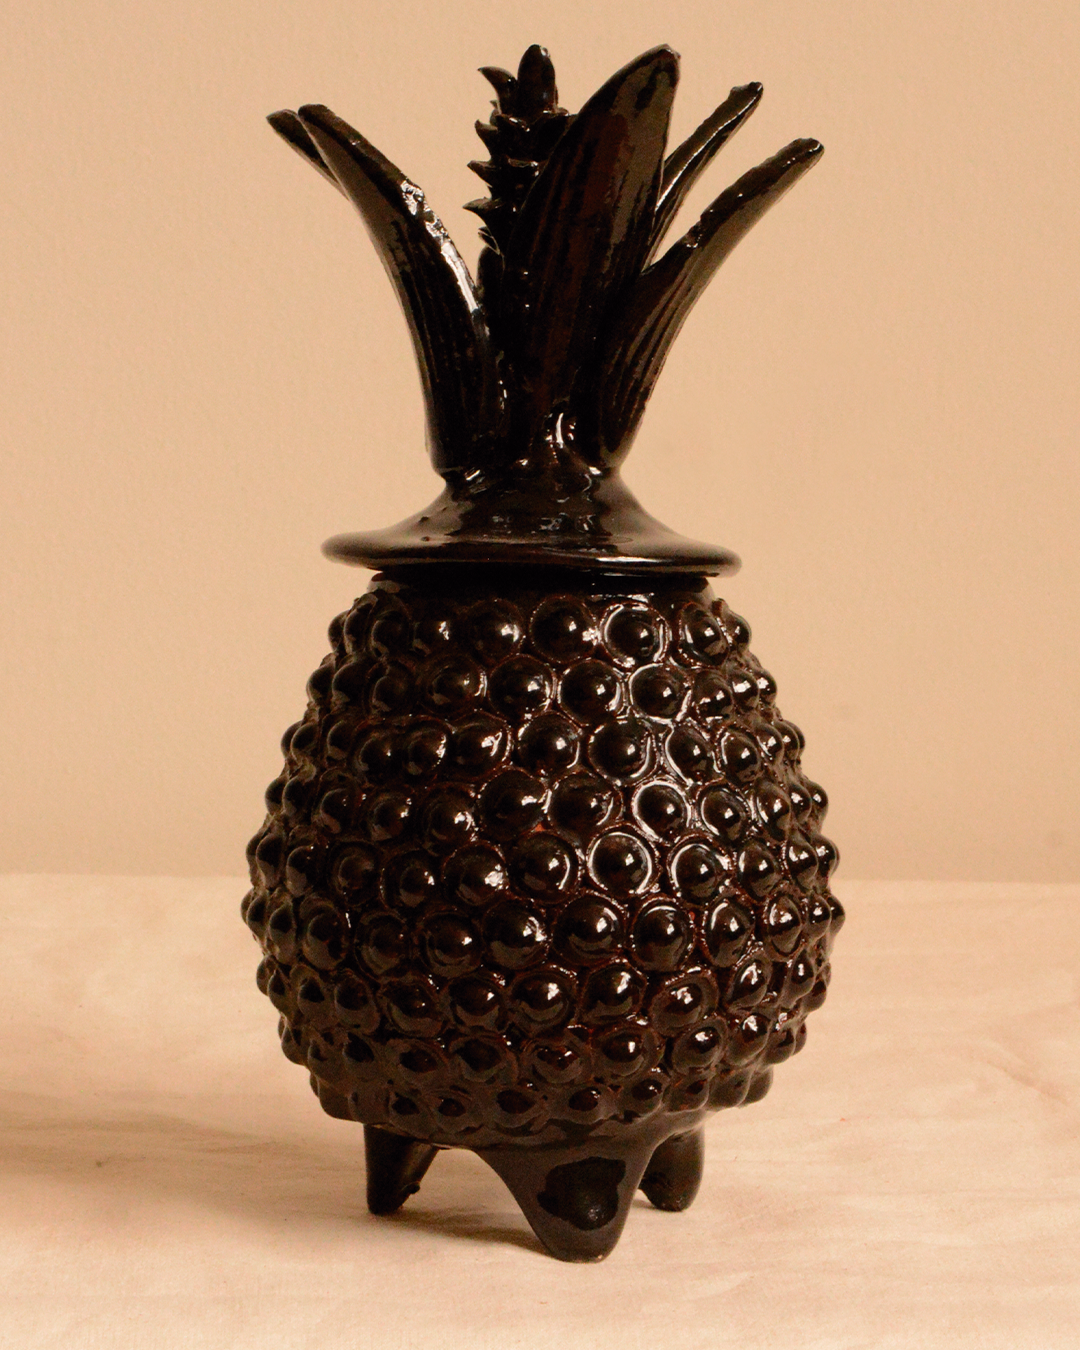 26cm black pineapple